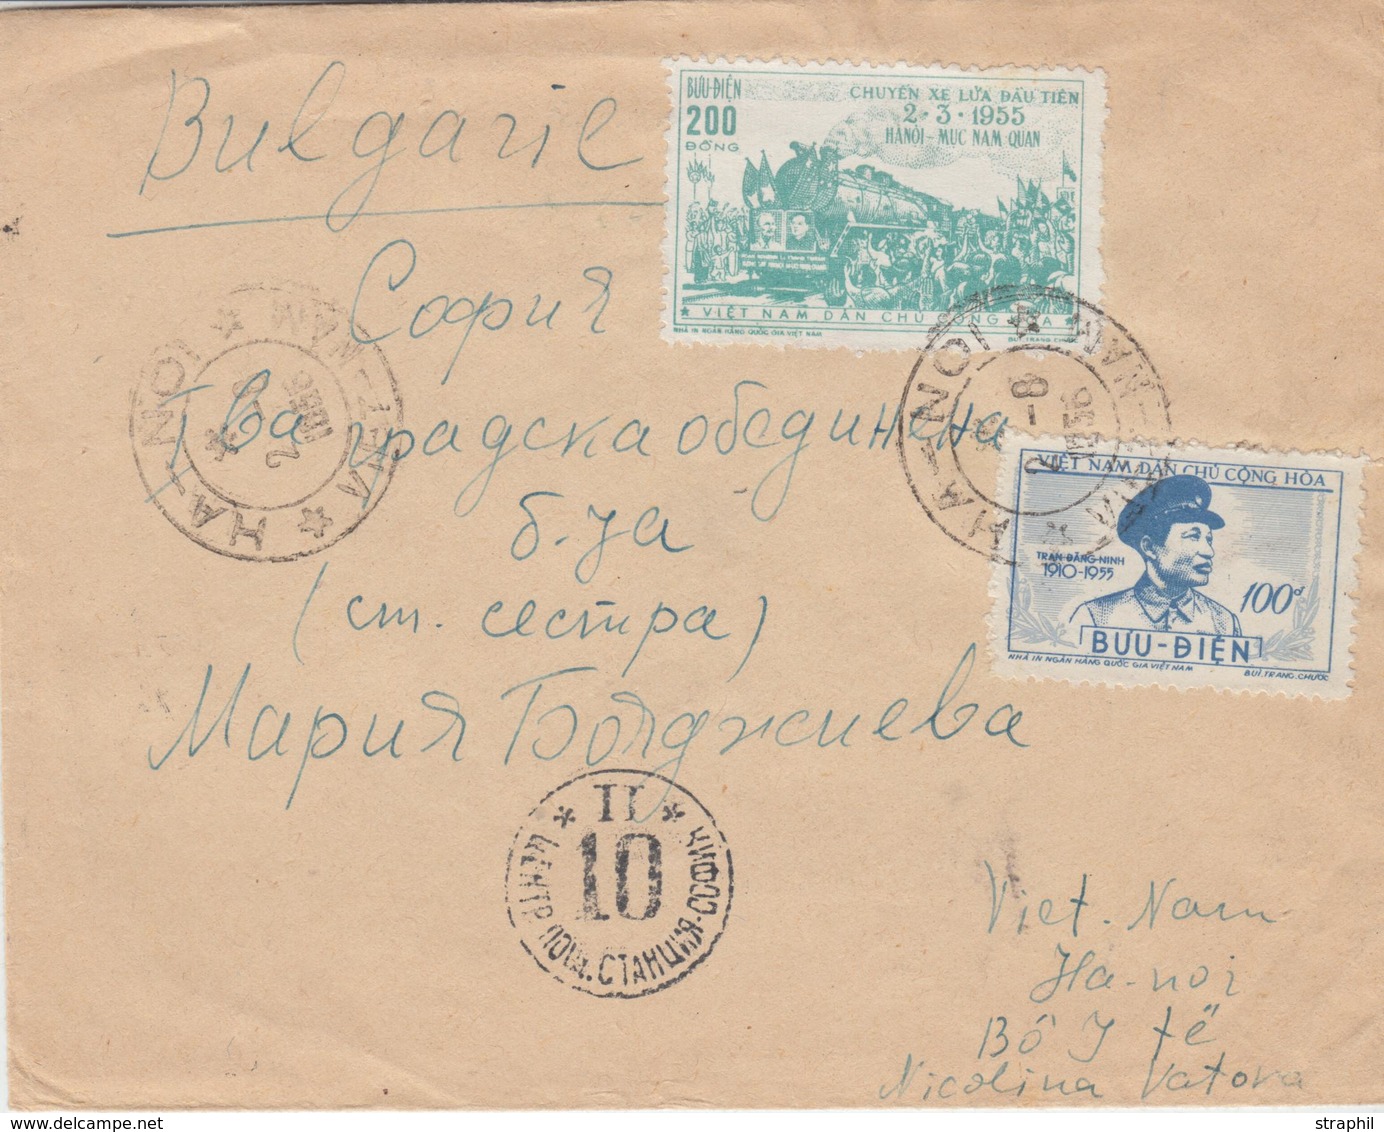 L VIETNAM DU NORD - L - N°90, 107 - S/Pli De Hanoï - 2 Juin 1956 - Pr La Bulgarie - TB - Vietnam